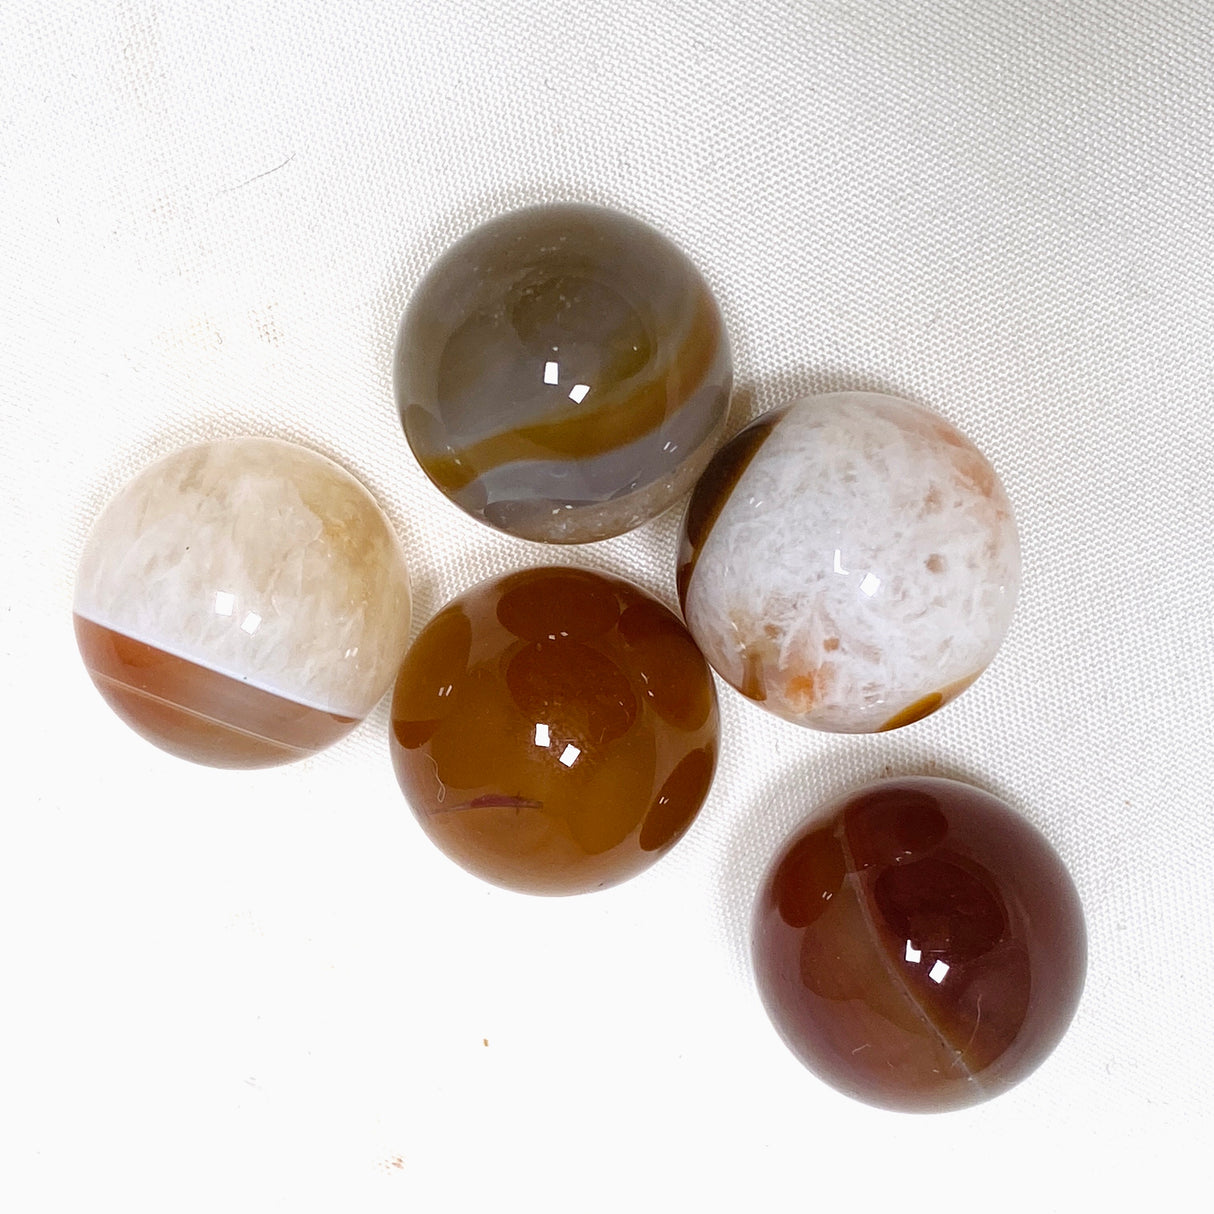 Mini Spheres - Assorted Gemstones